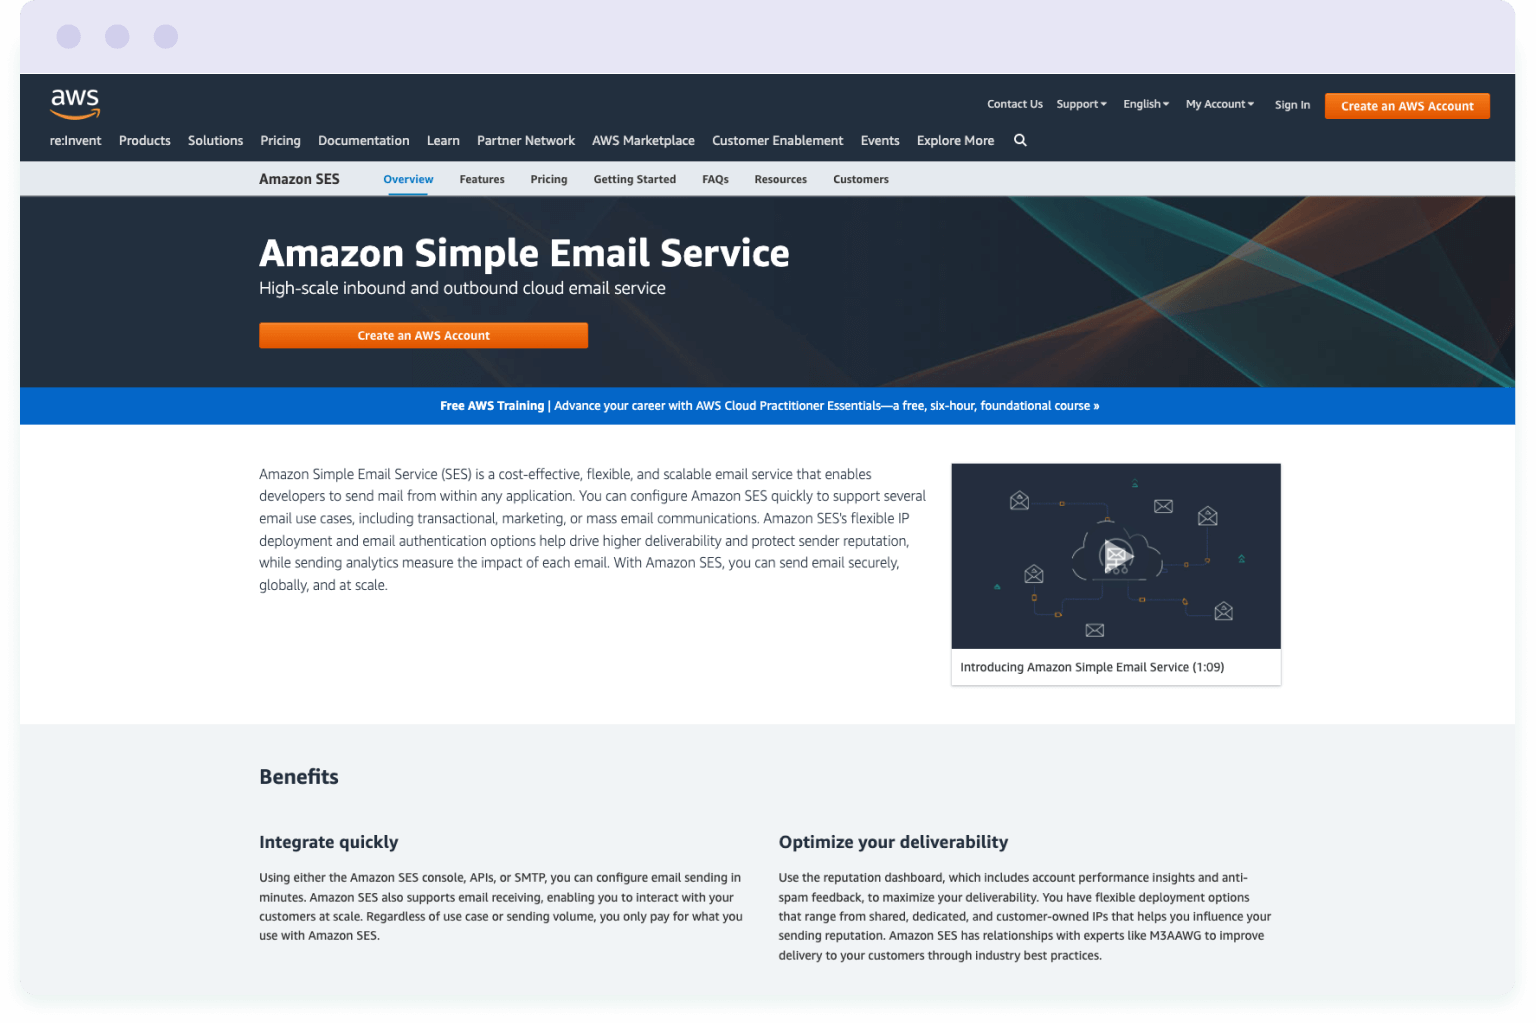 Image of Amazon SES website homepage